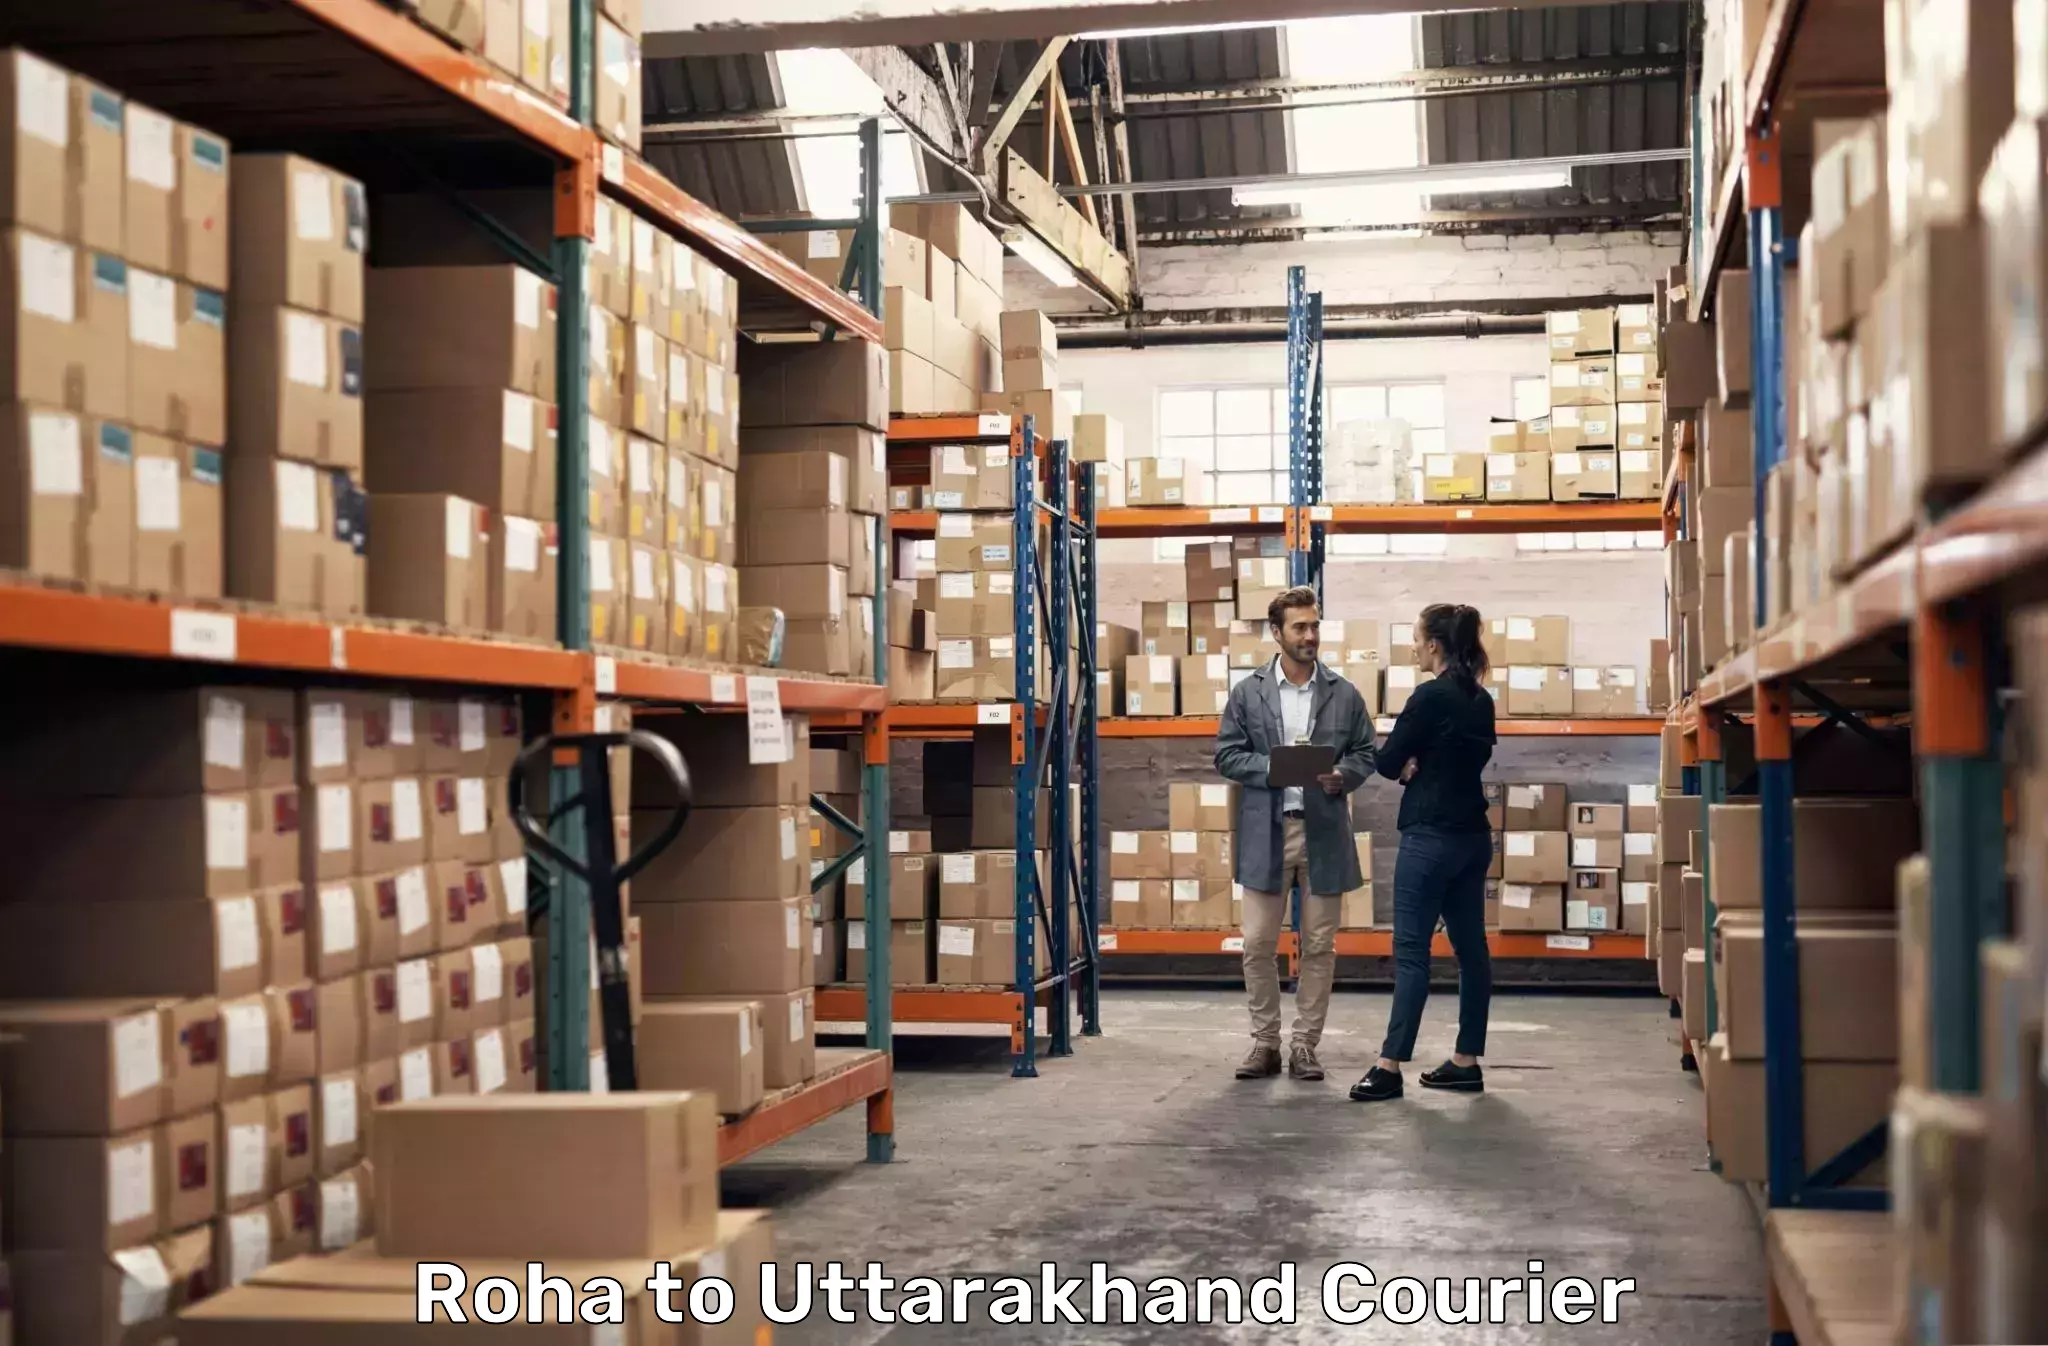 Cargo delivery service Roha to Uttarakhand